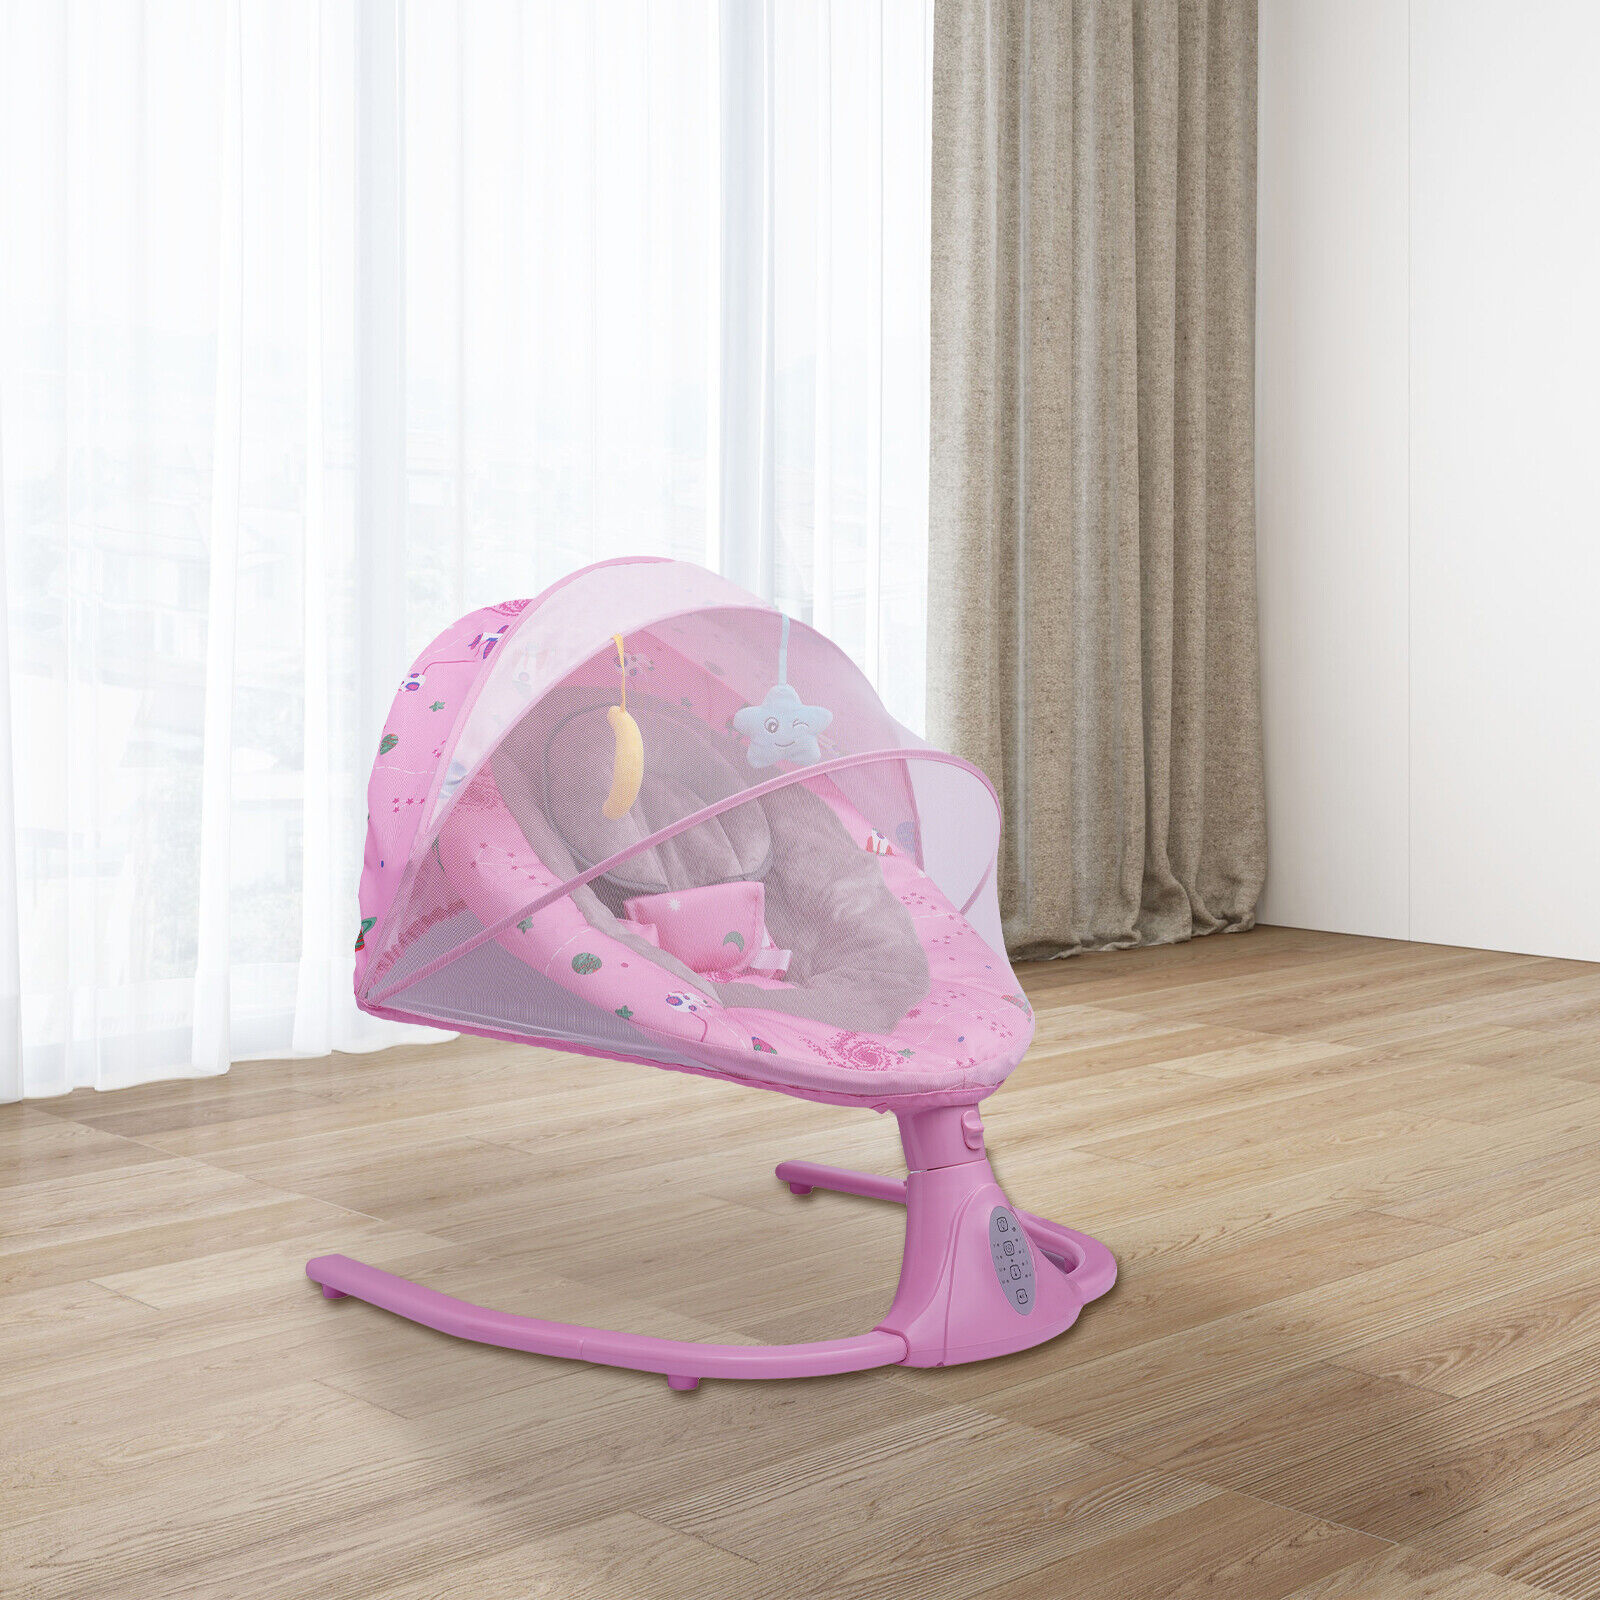 TFCFL Portable Electric Baby Swing Cradle Rocker Newborn Comfort Sleep Chair Crib Music Seat Pink - image 2 of 8